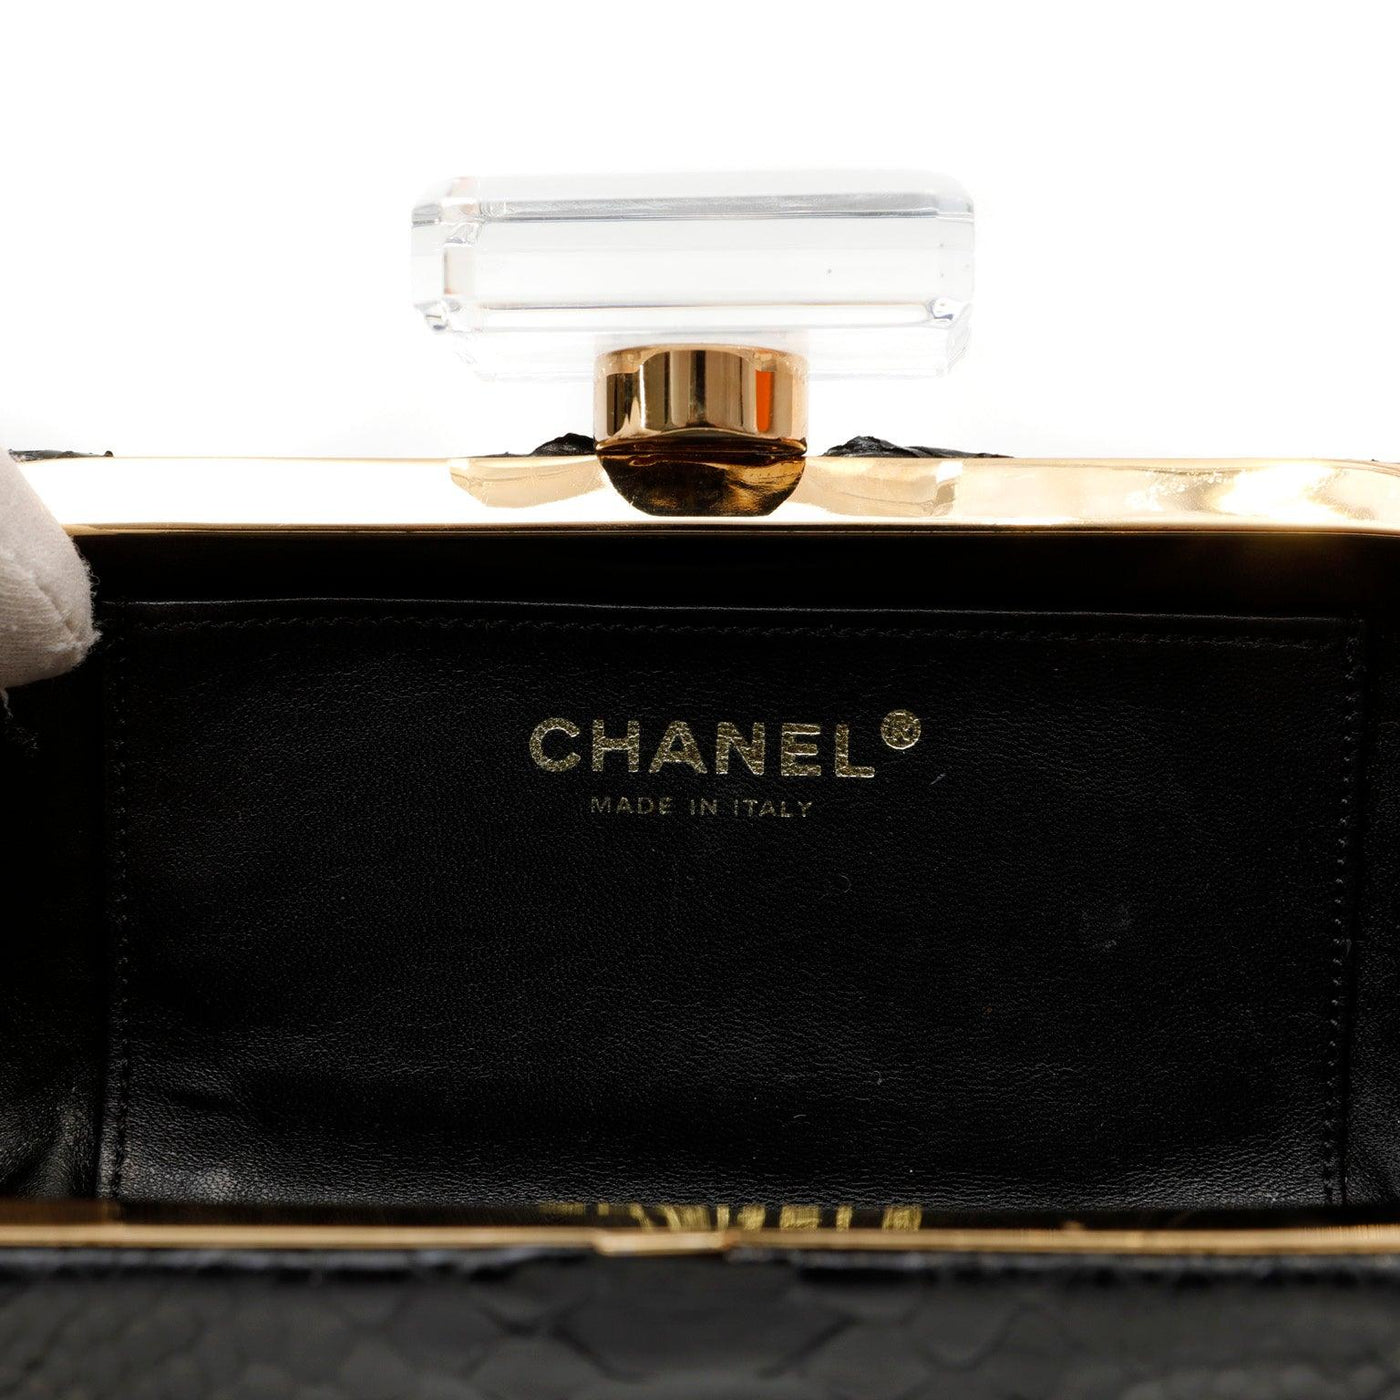 Chanel Black Python Clutch - Only Authentics